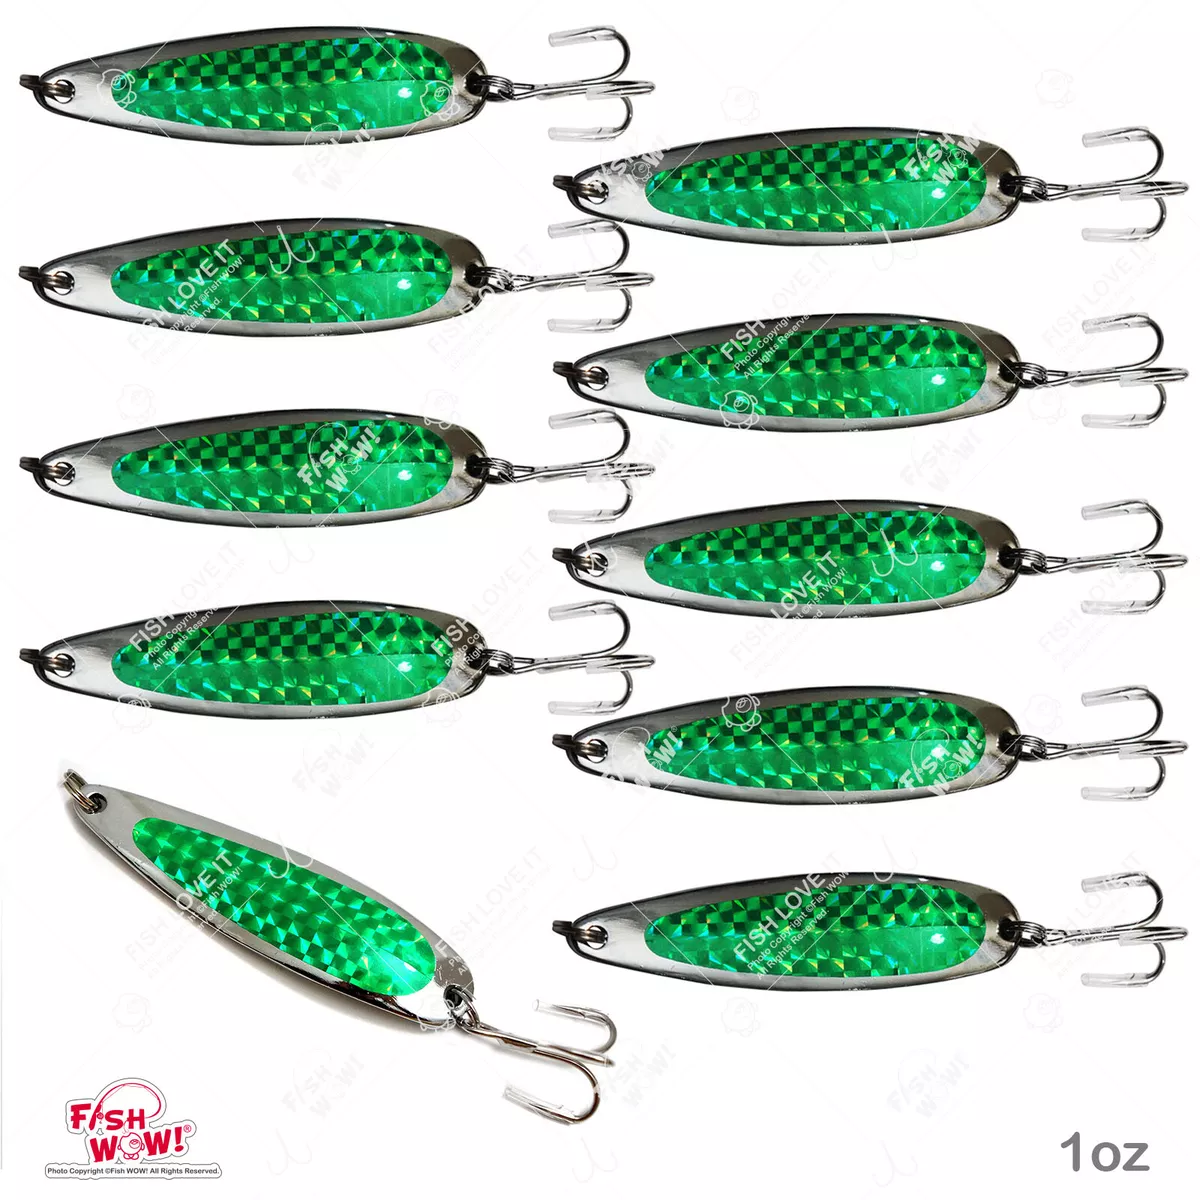 10pcs Fishing 1oz Spoon jig Treble Hook Casting Trolling Spoons Green Fish  WOW!®